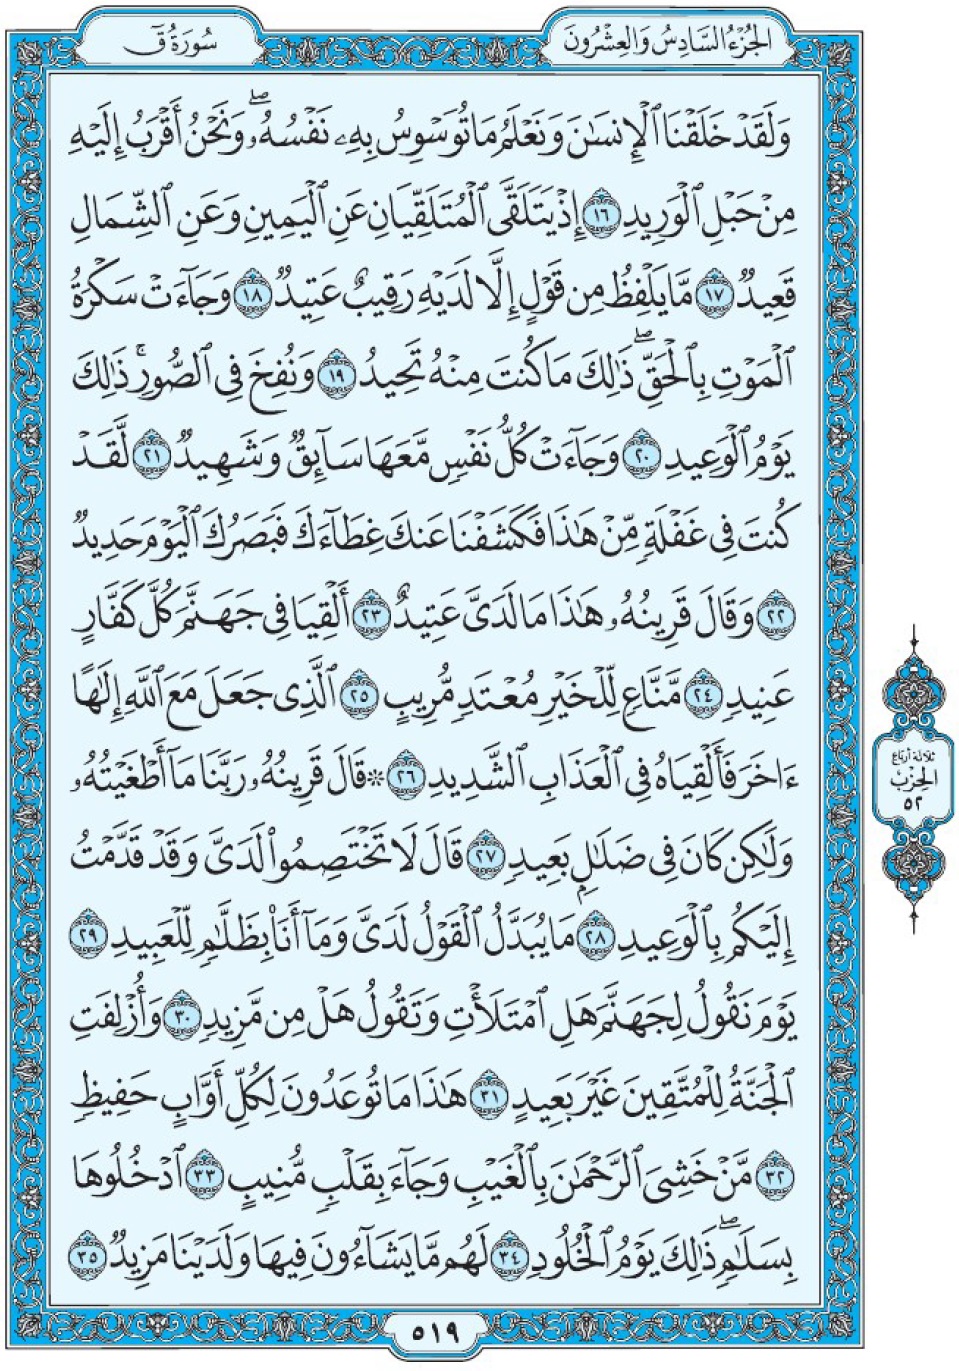 Коран Мединский мусхаф страница 519, сура Каф, аят 16-35